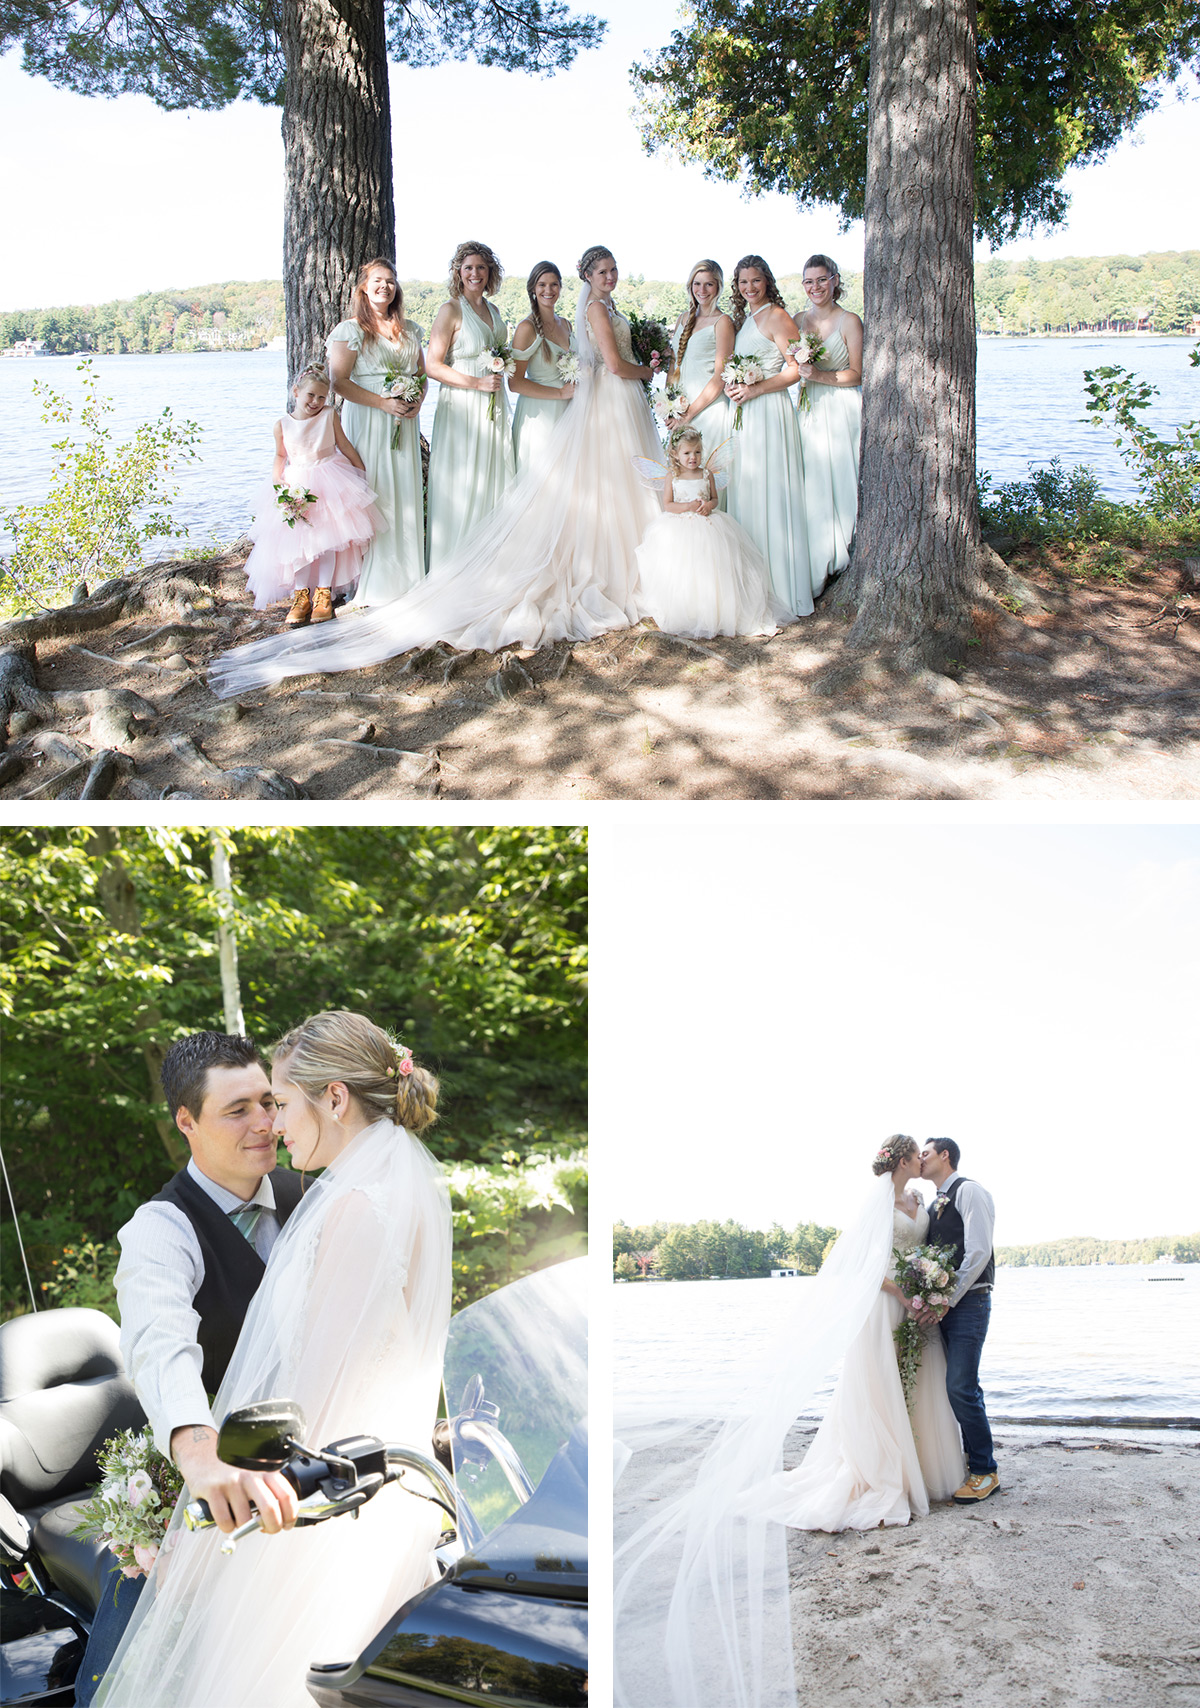 Wedding Photographers in Toronto